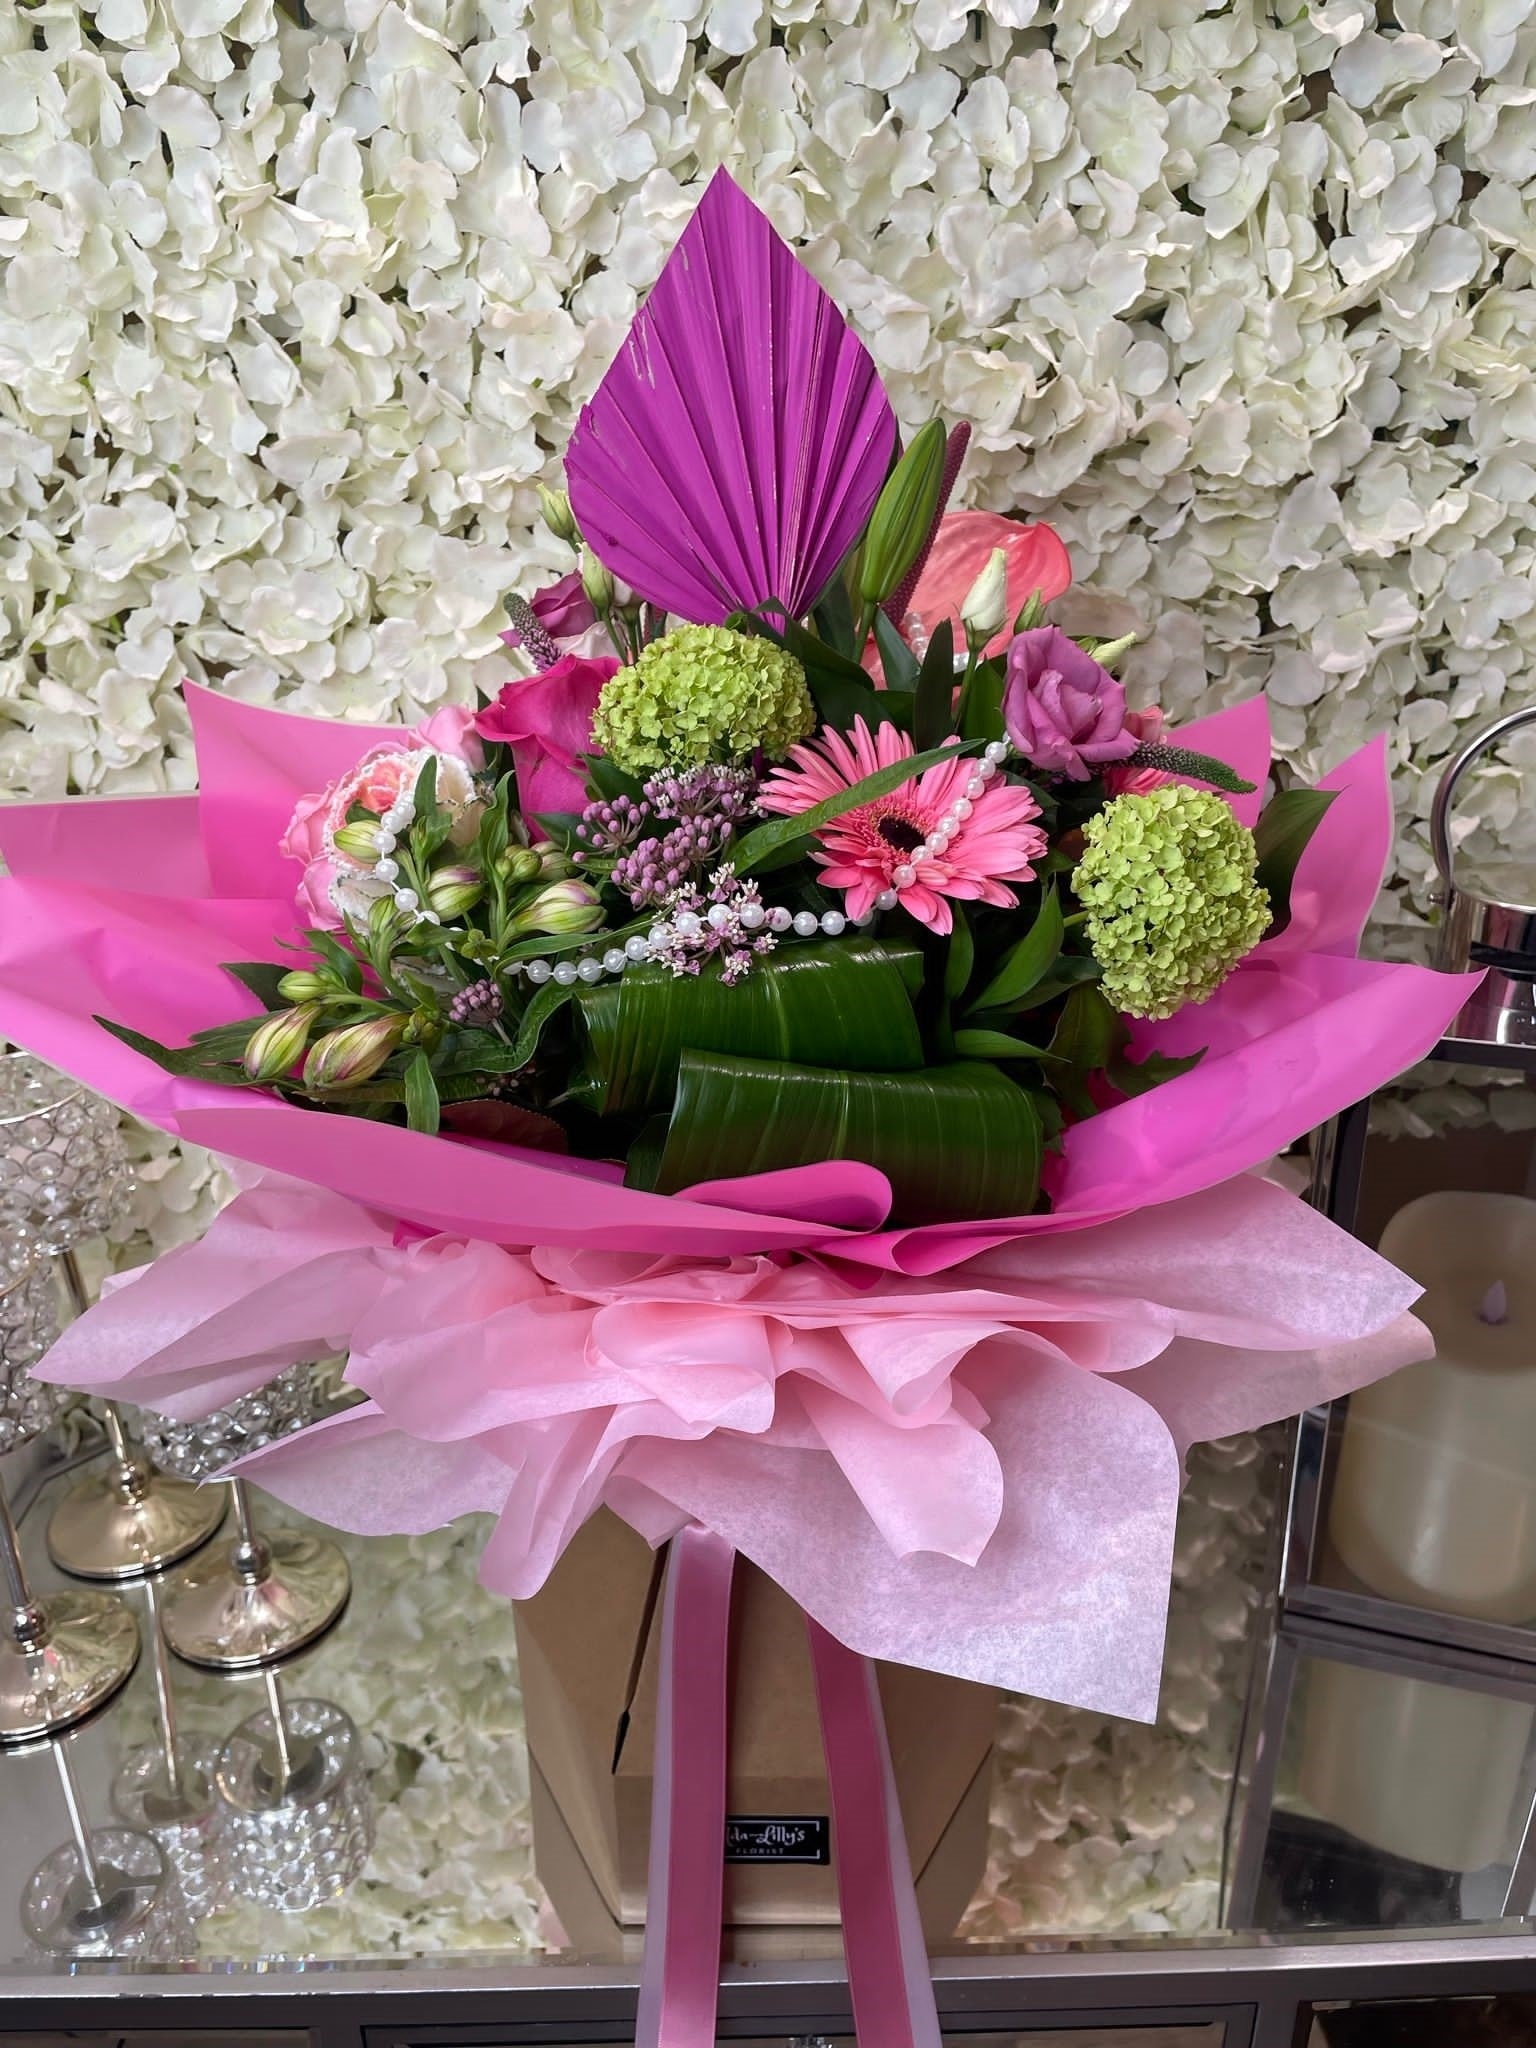 Ada Lilly's Exquisite Hand Tied Bouquet Flower Arrangement